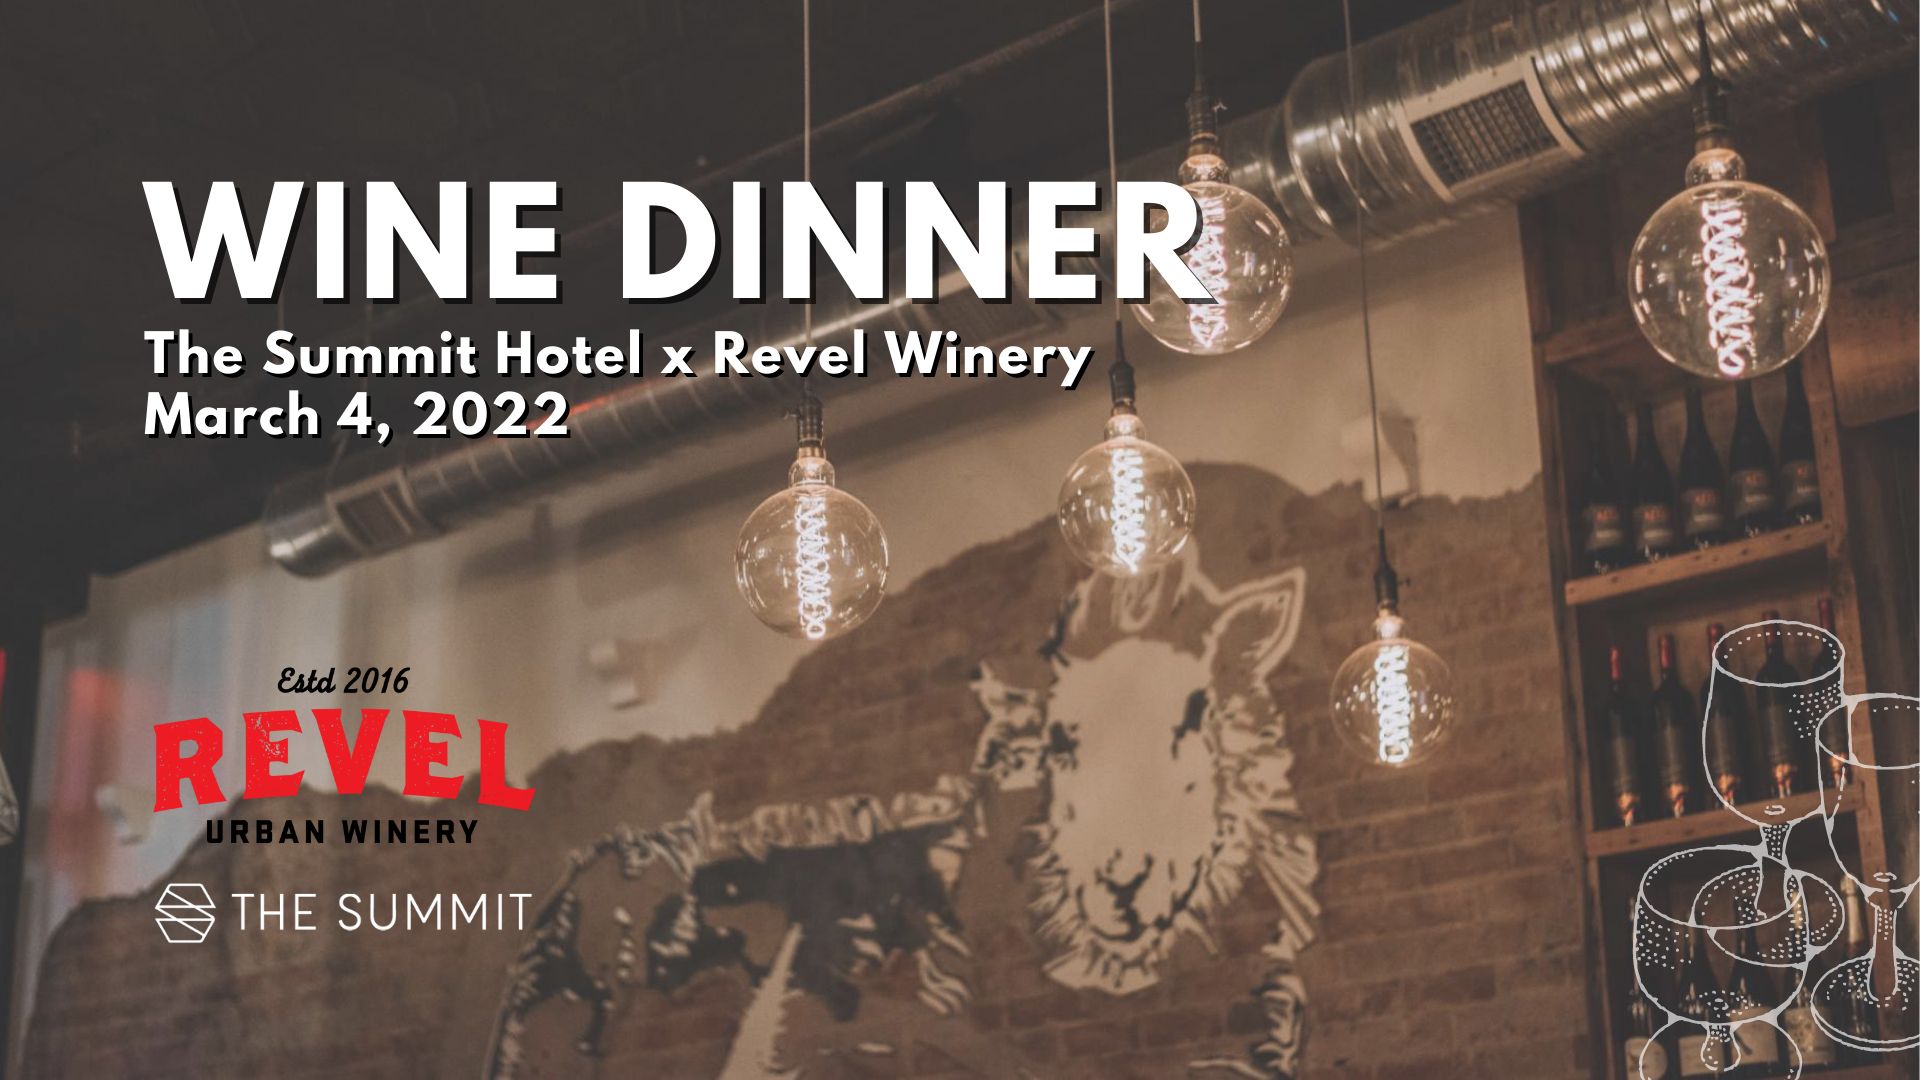 Revel Wine Dinner, Cincinnati, Ohio, United States